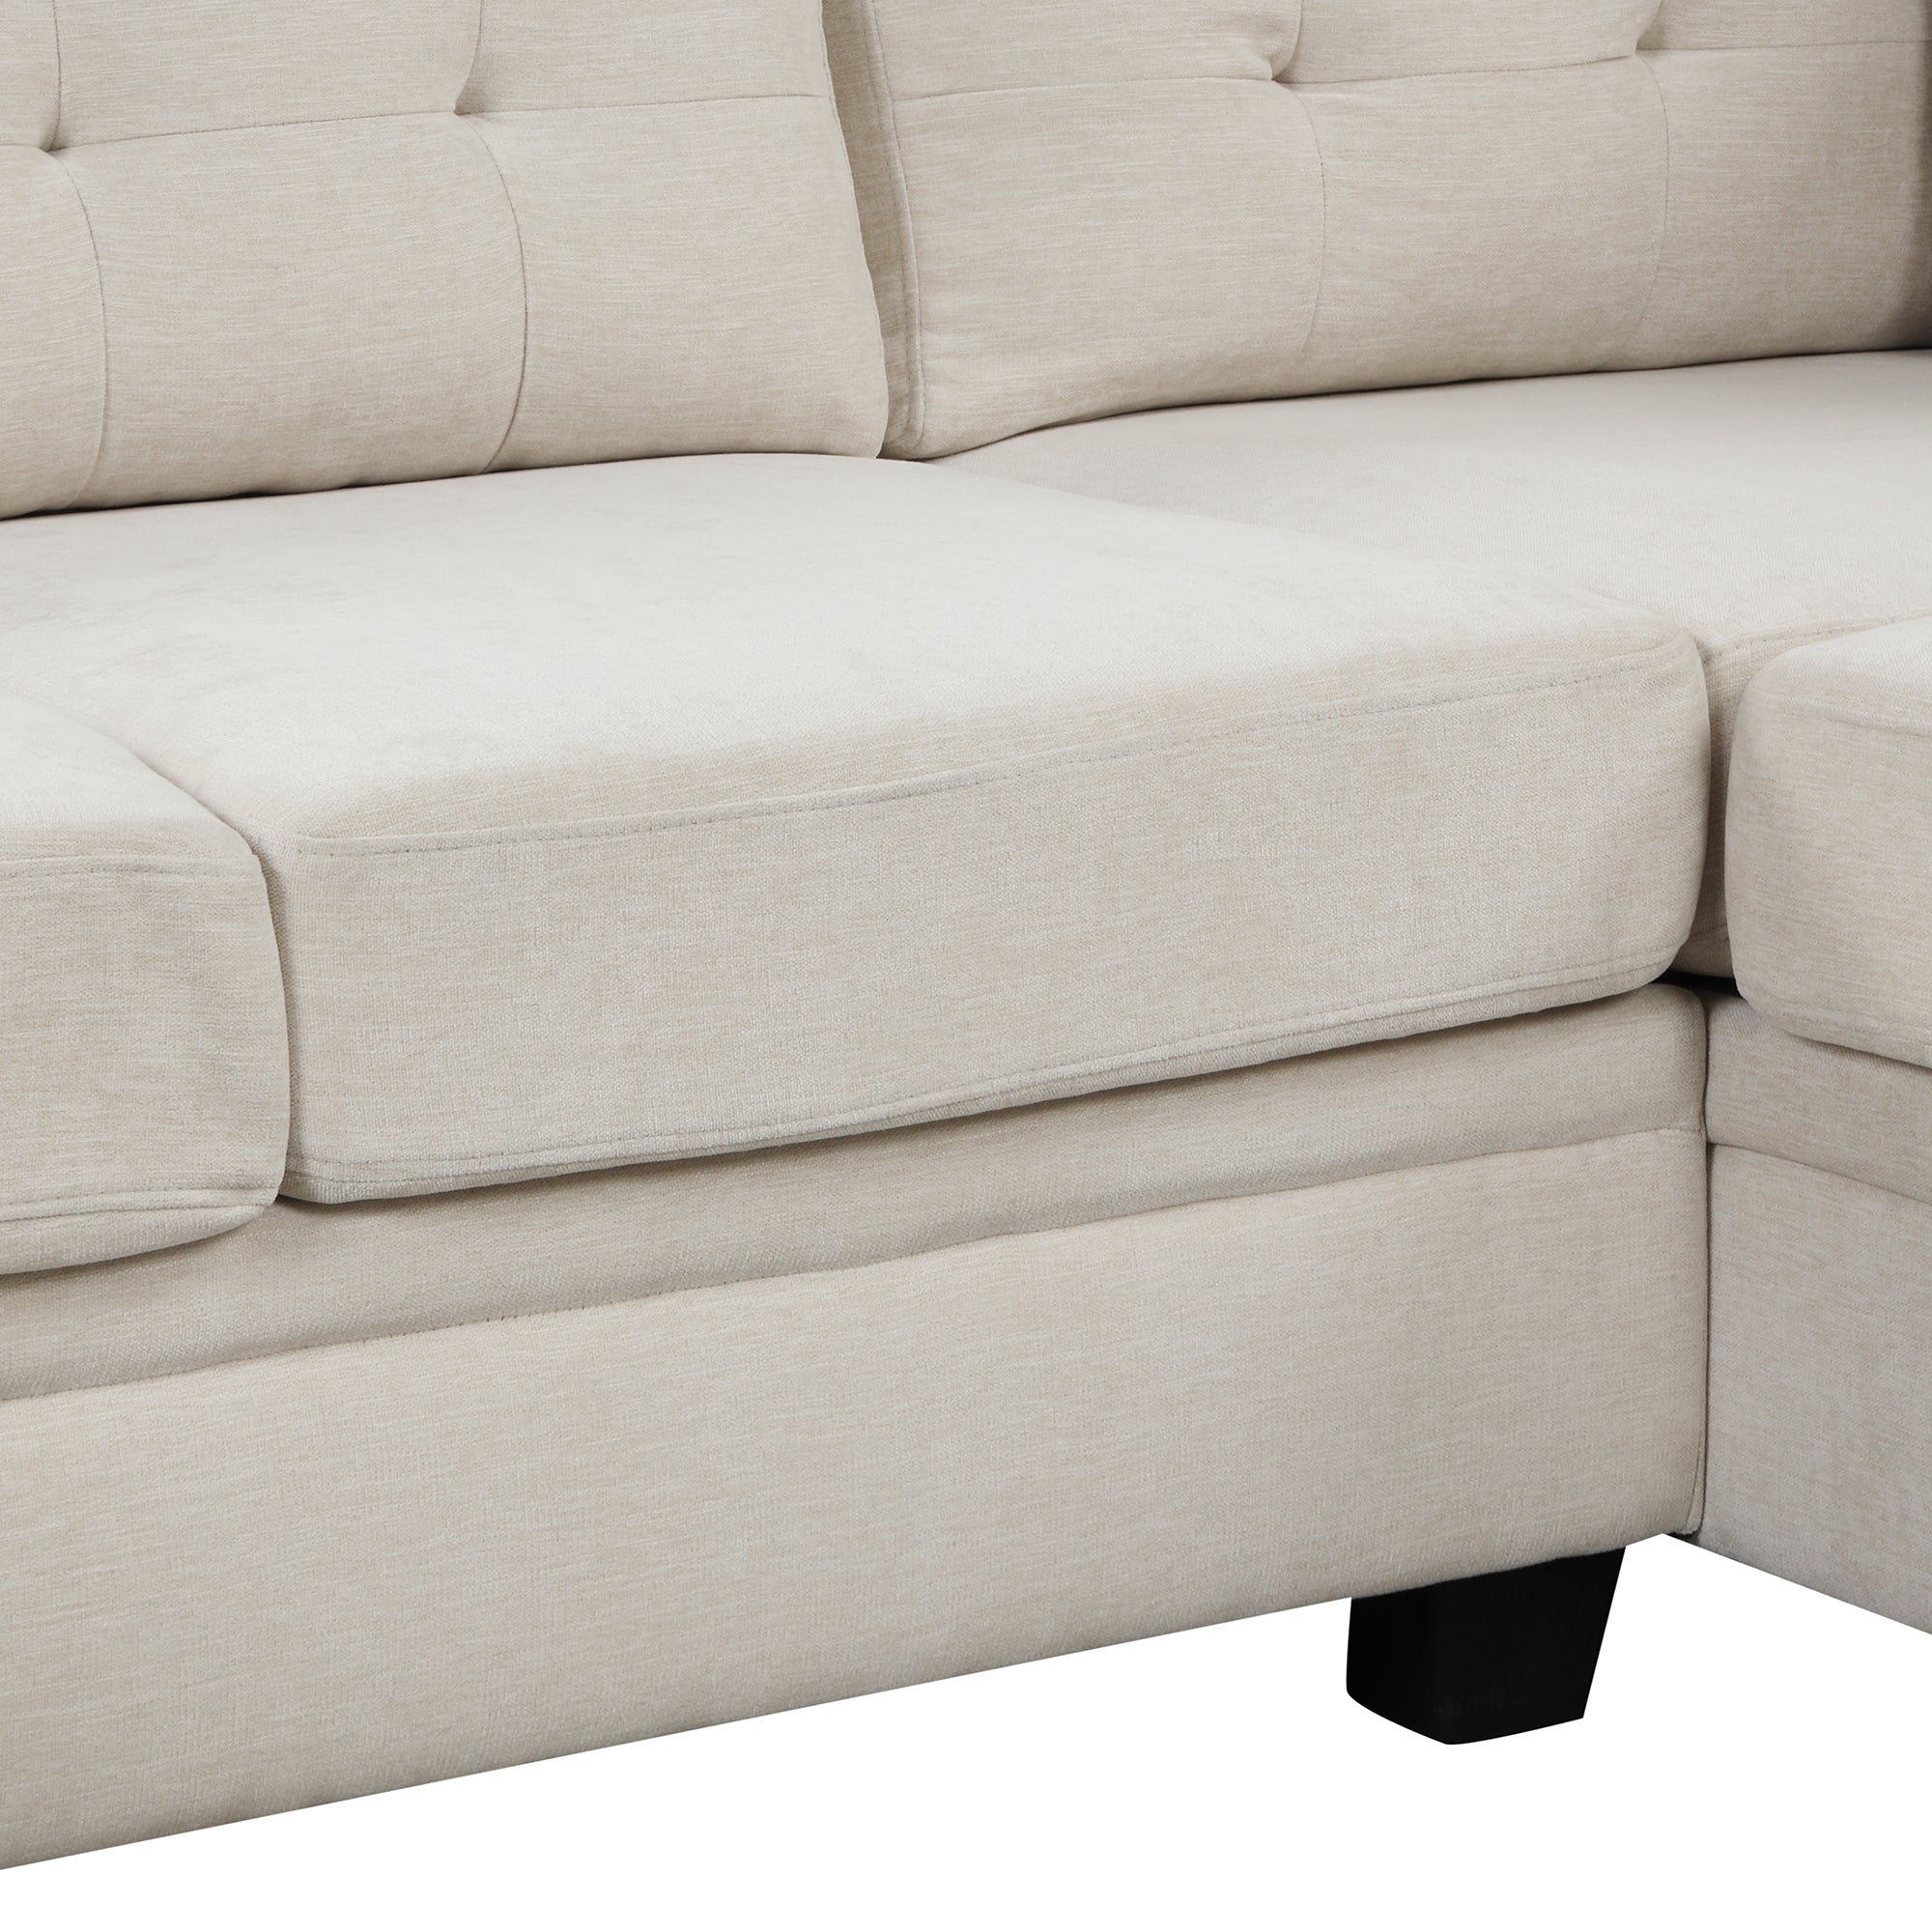 120" Modern U-Shaped Corner Sectional Sofa Upholstered Linen Fabric Sofa Couch for Living Room, Bedroom, Beige